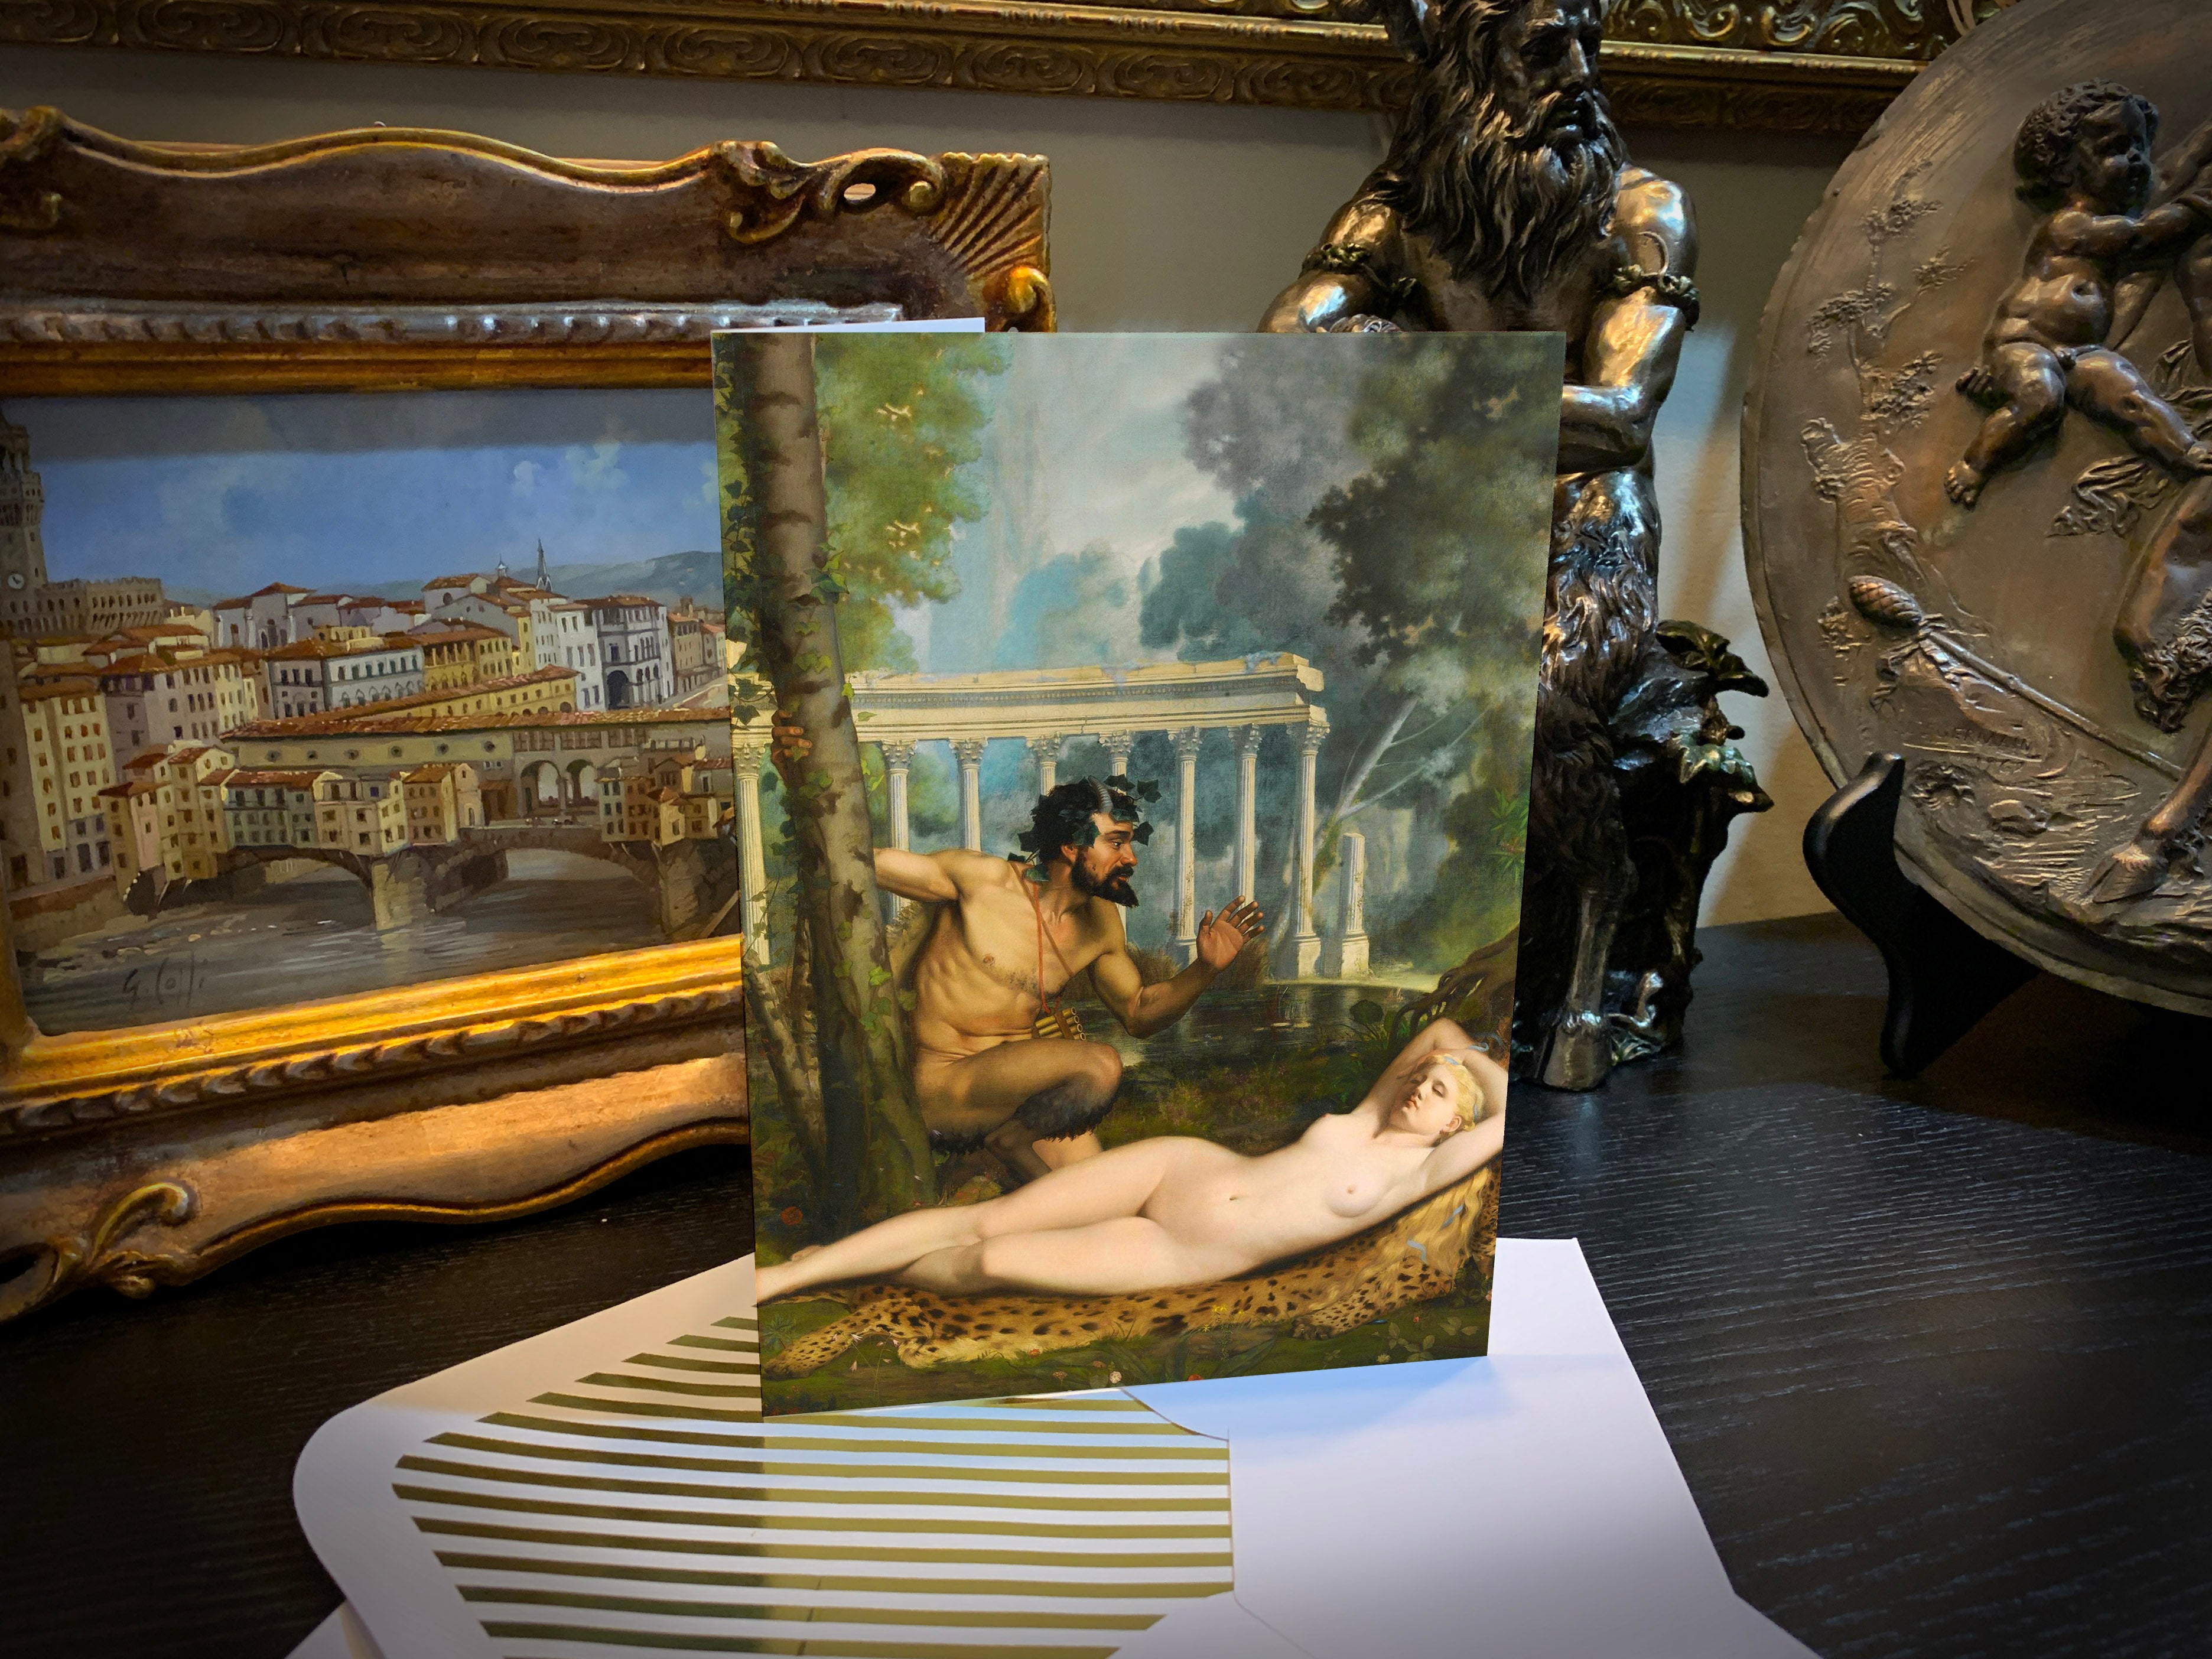 Pan and Venus by Adolphe Alexandre Lesrel, Greeting Card with Elegant Striped Gold Foil Envelope, 1 Card/Envelope